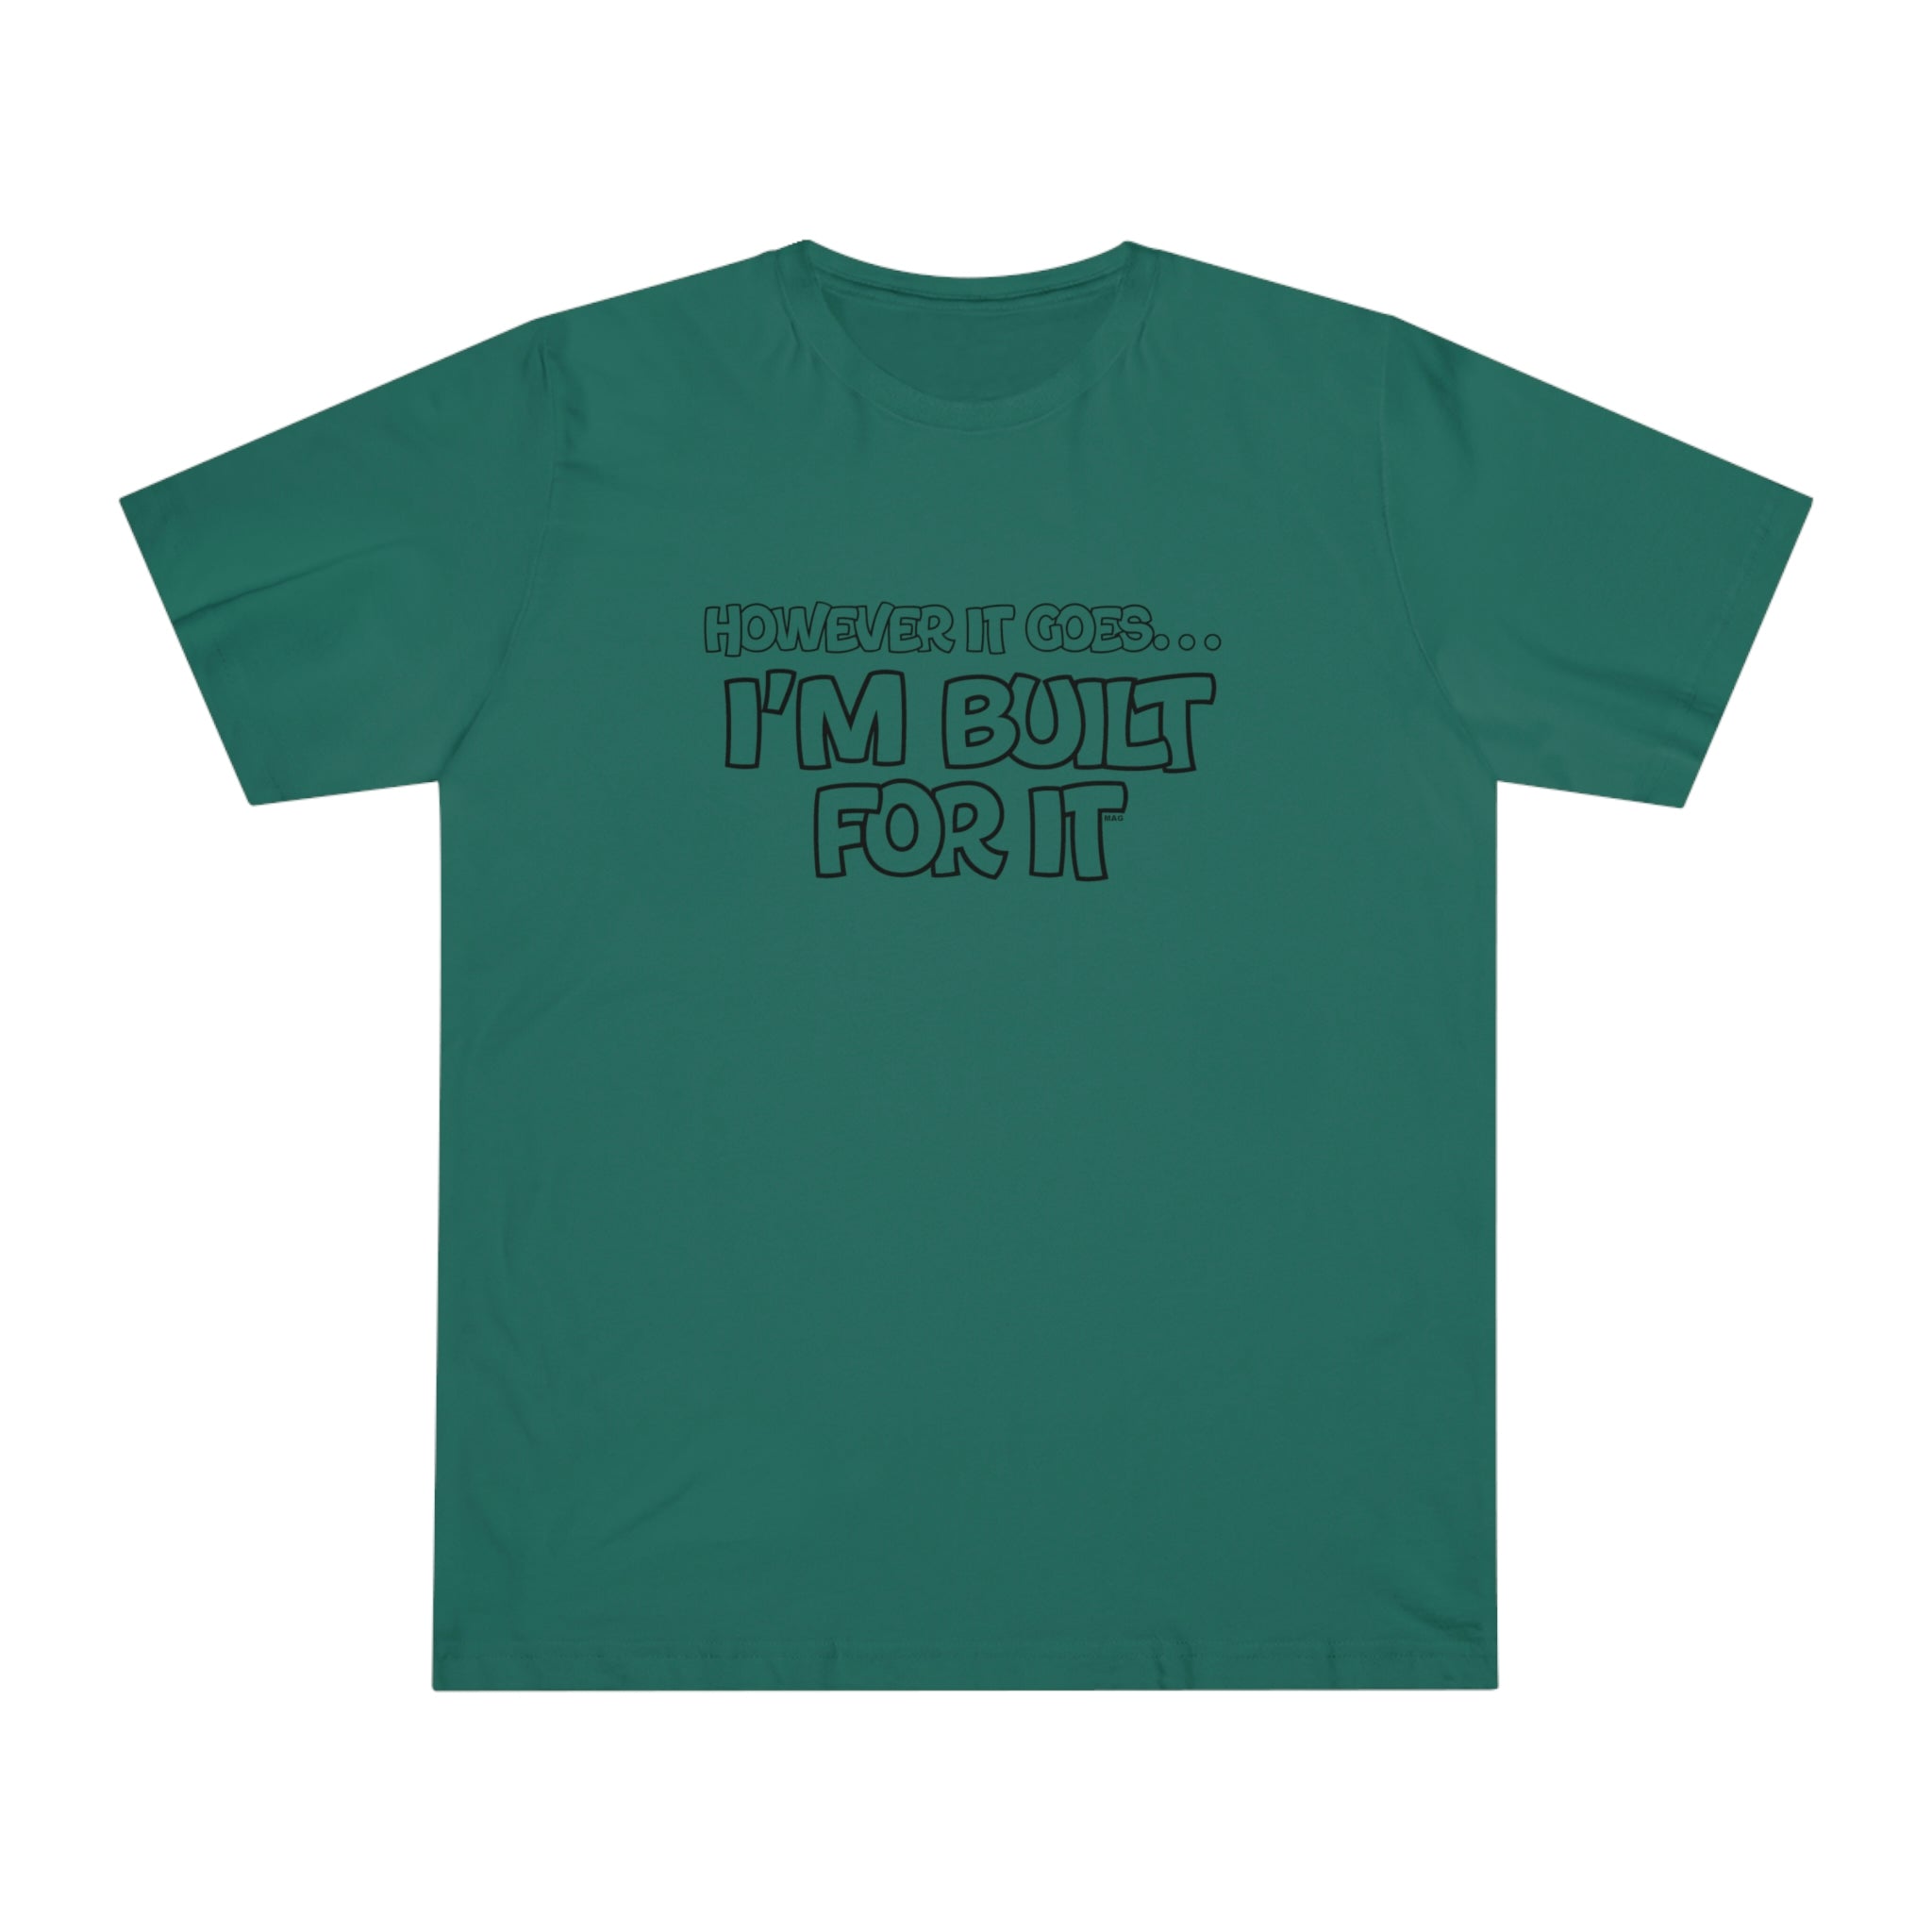 Built For It - Unisex Deluxe T-shirt